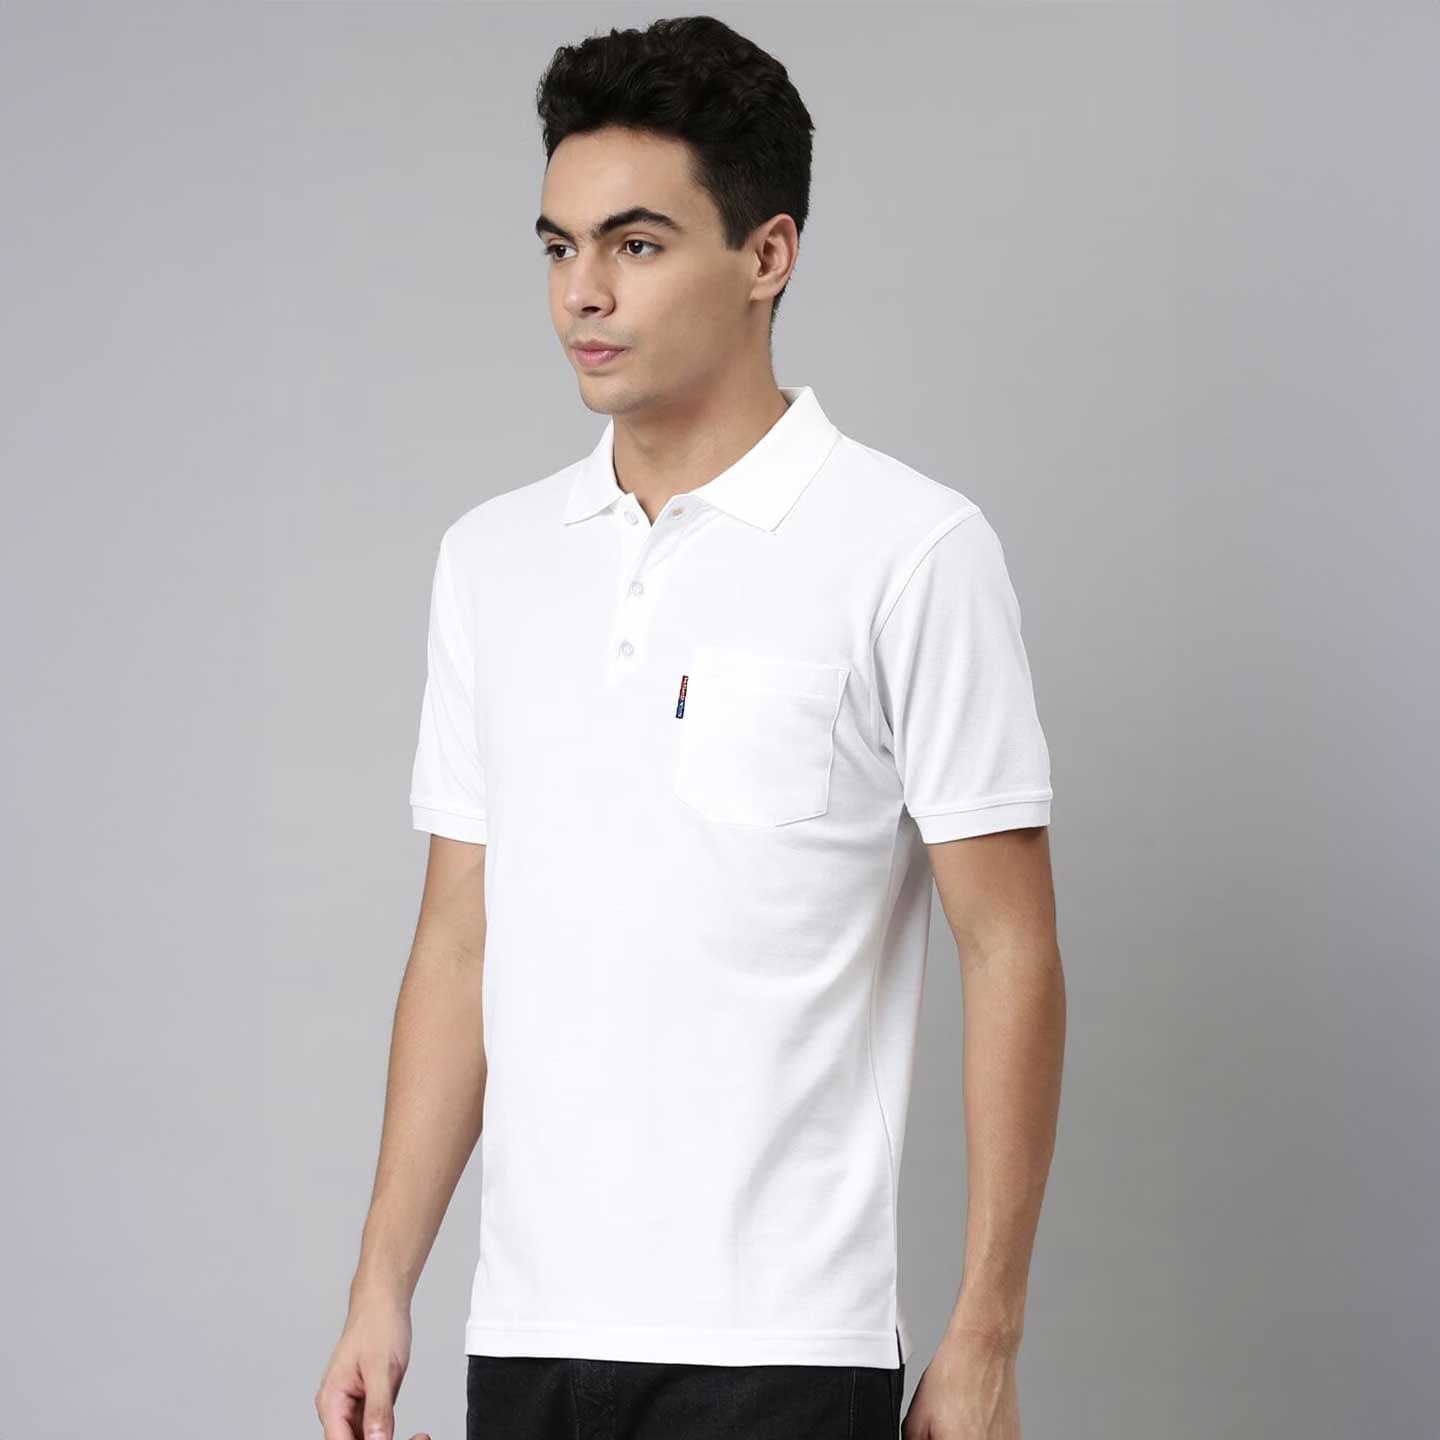 Salesianer Men's Short Sleeves Polo Shirt Men's Polo Shirt Image White XS 